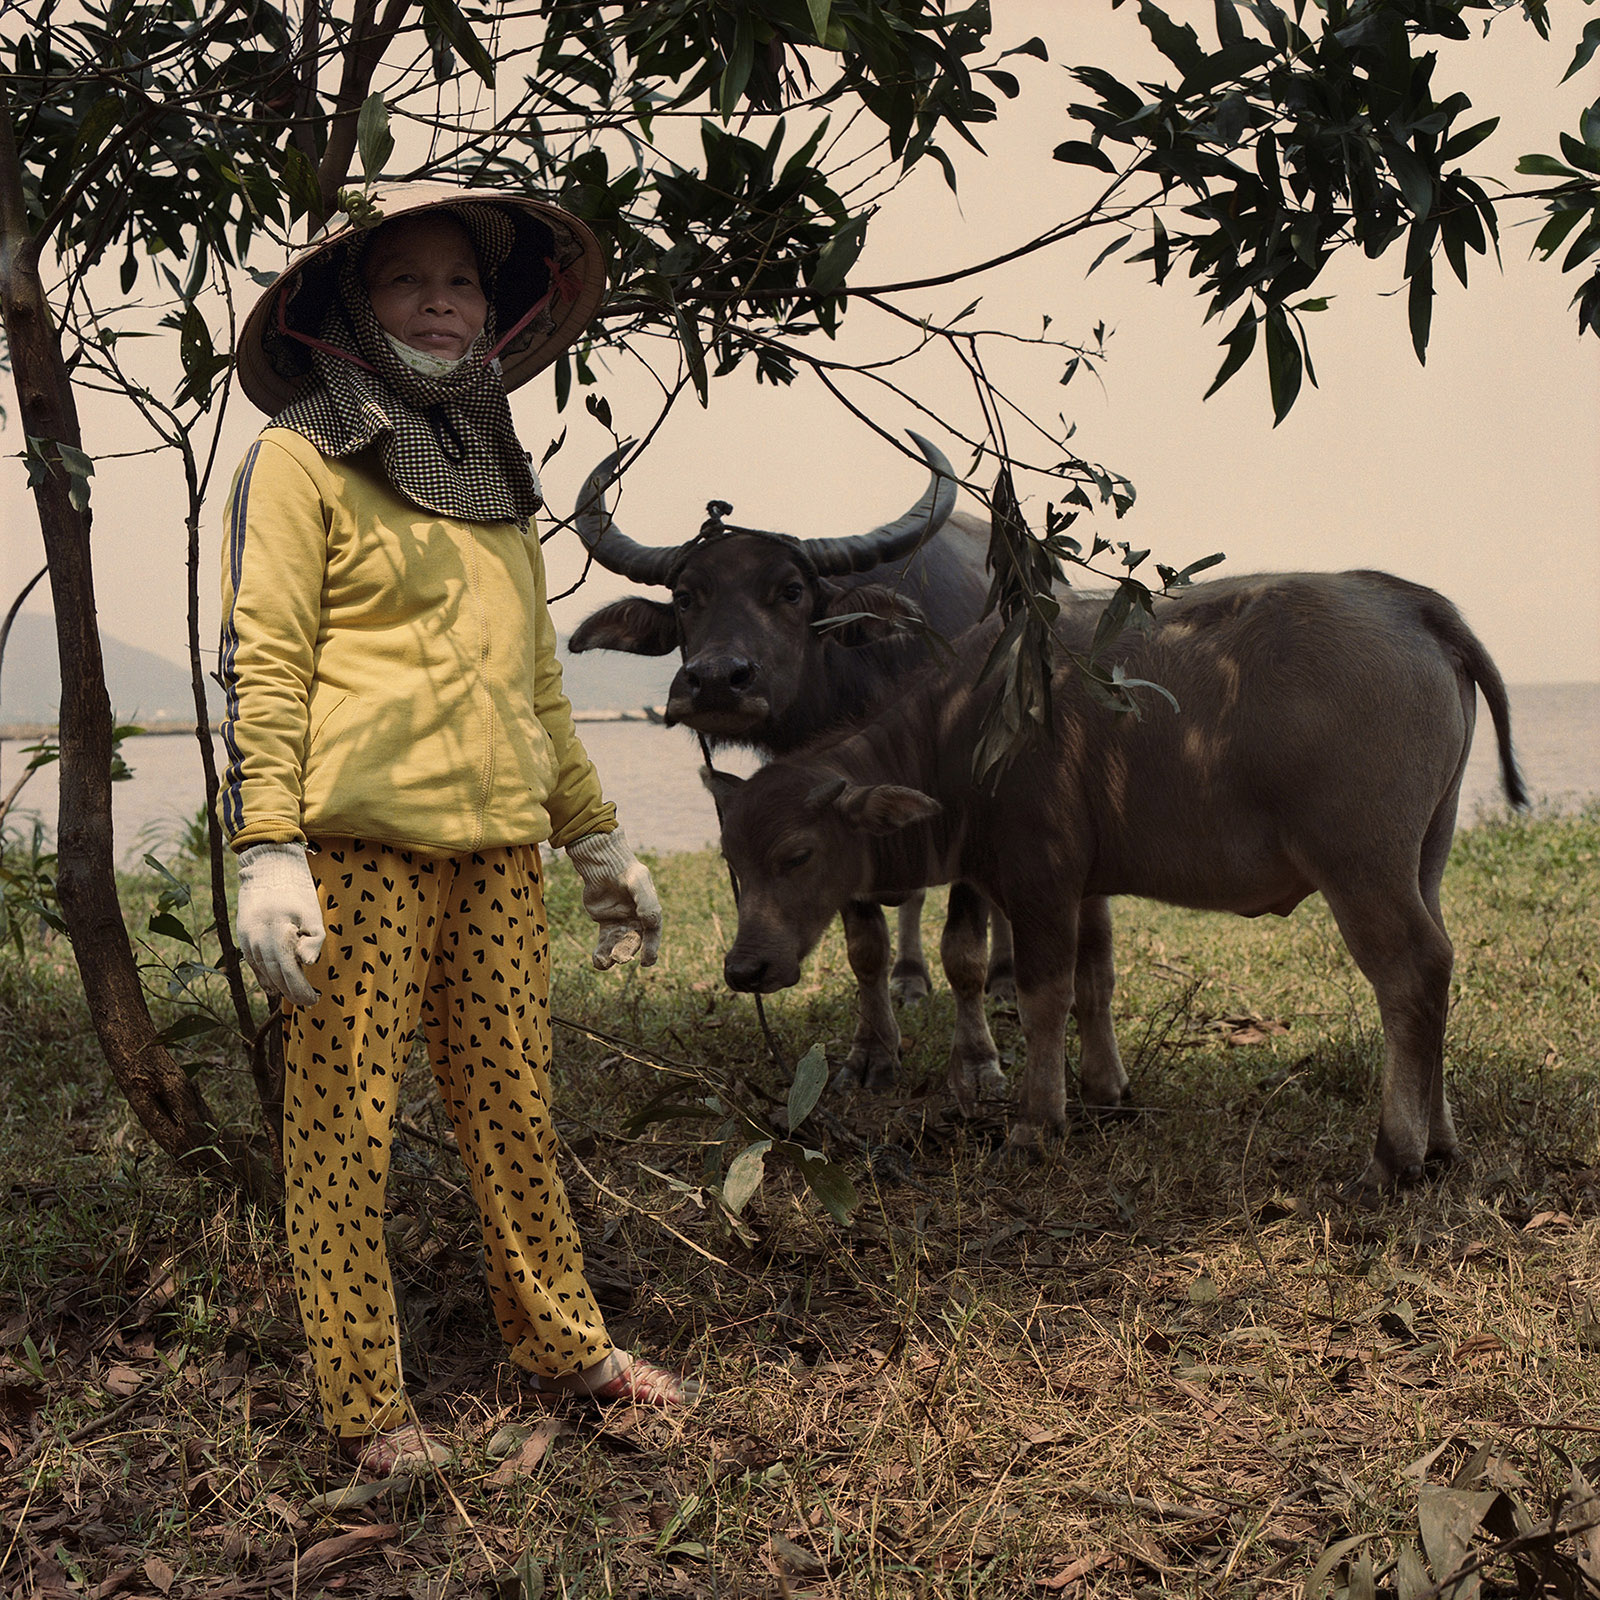 balienese woman herding water Buffalo in Lăng Cô Da Nang, Vietnam.